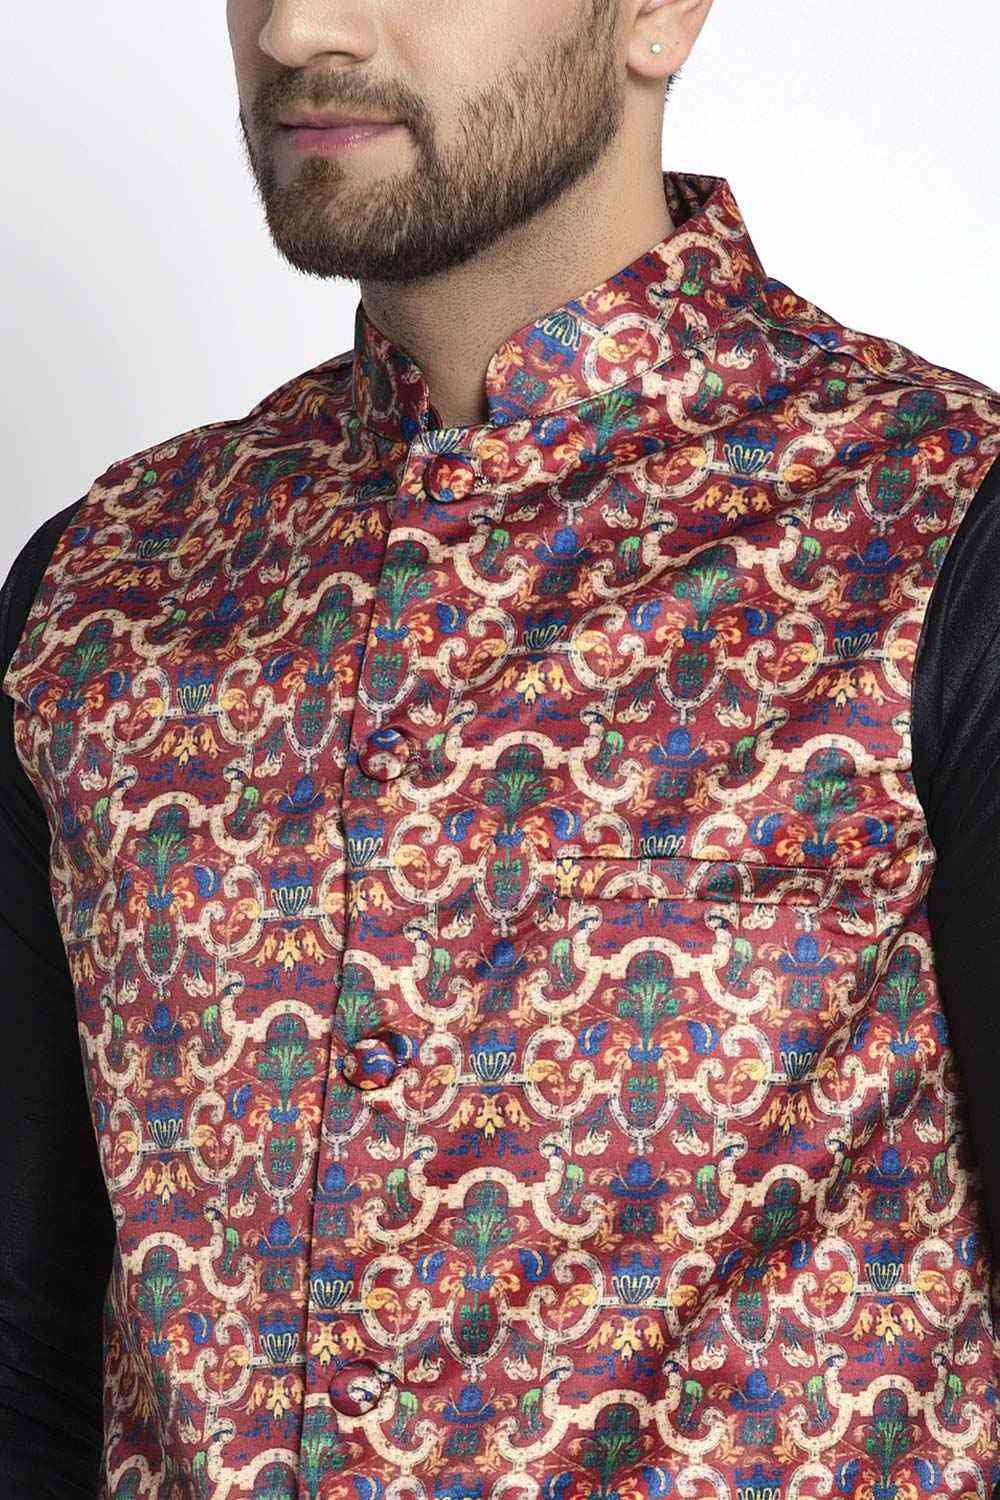 Buy Men's Black Silk Blend Micro Printed Men's Kurta Pajama Jacket Set Online